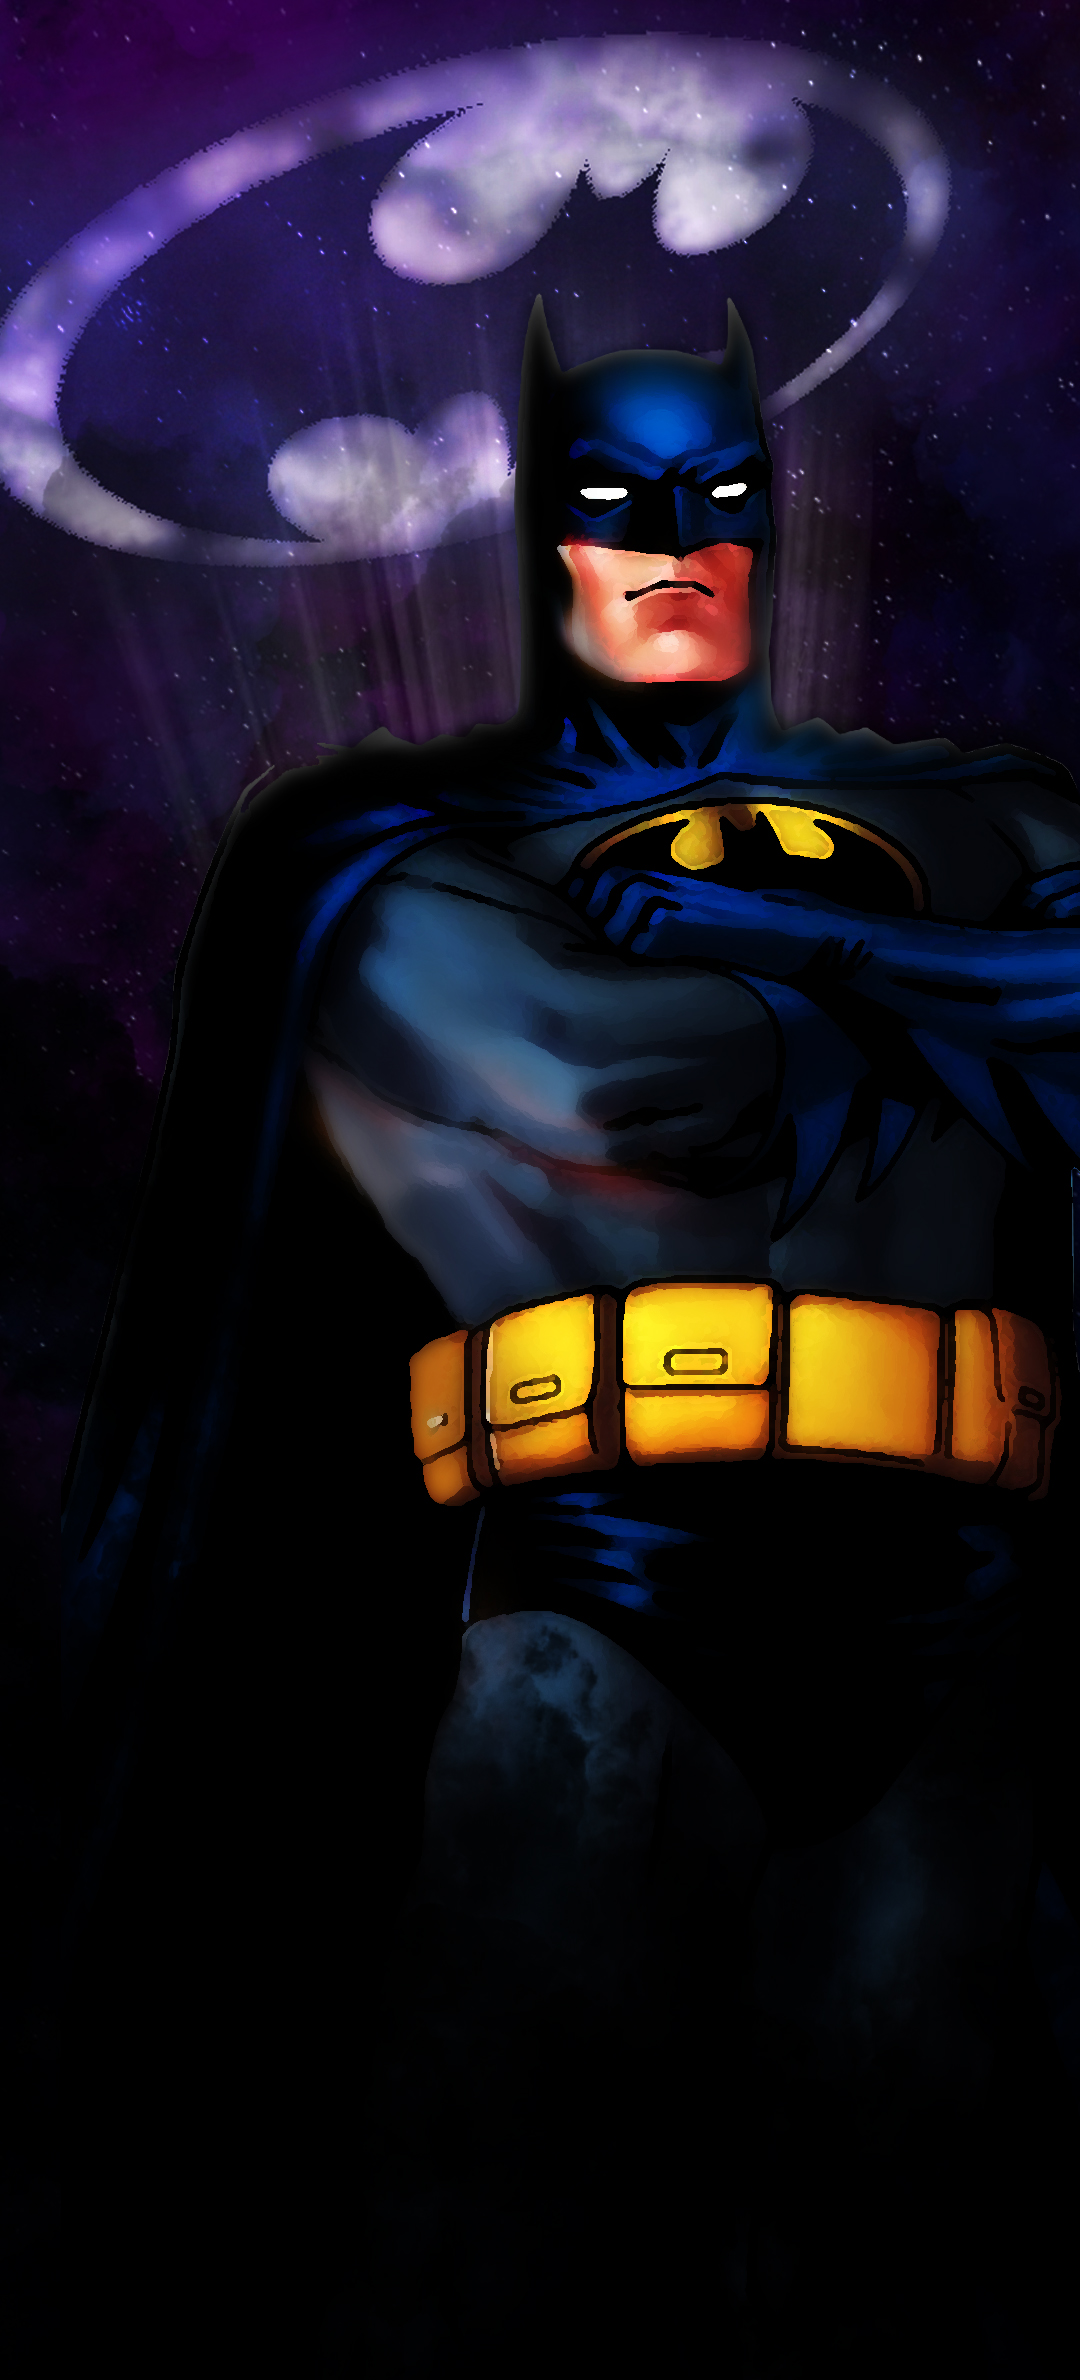 Batman Mobile Wallpaper by TheBJO13 on DeviantArt